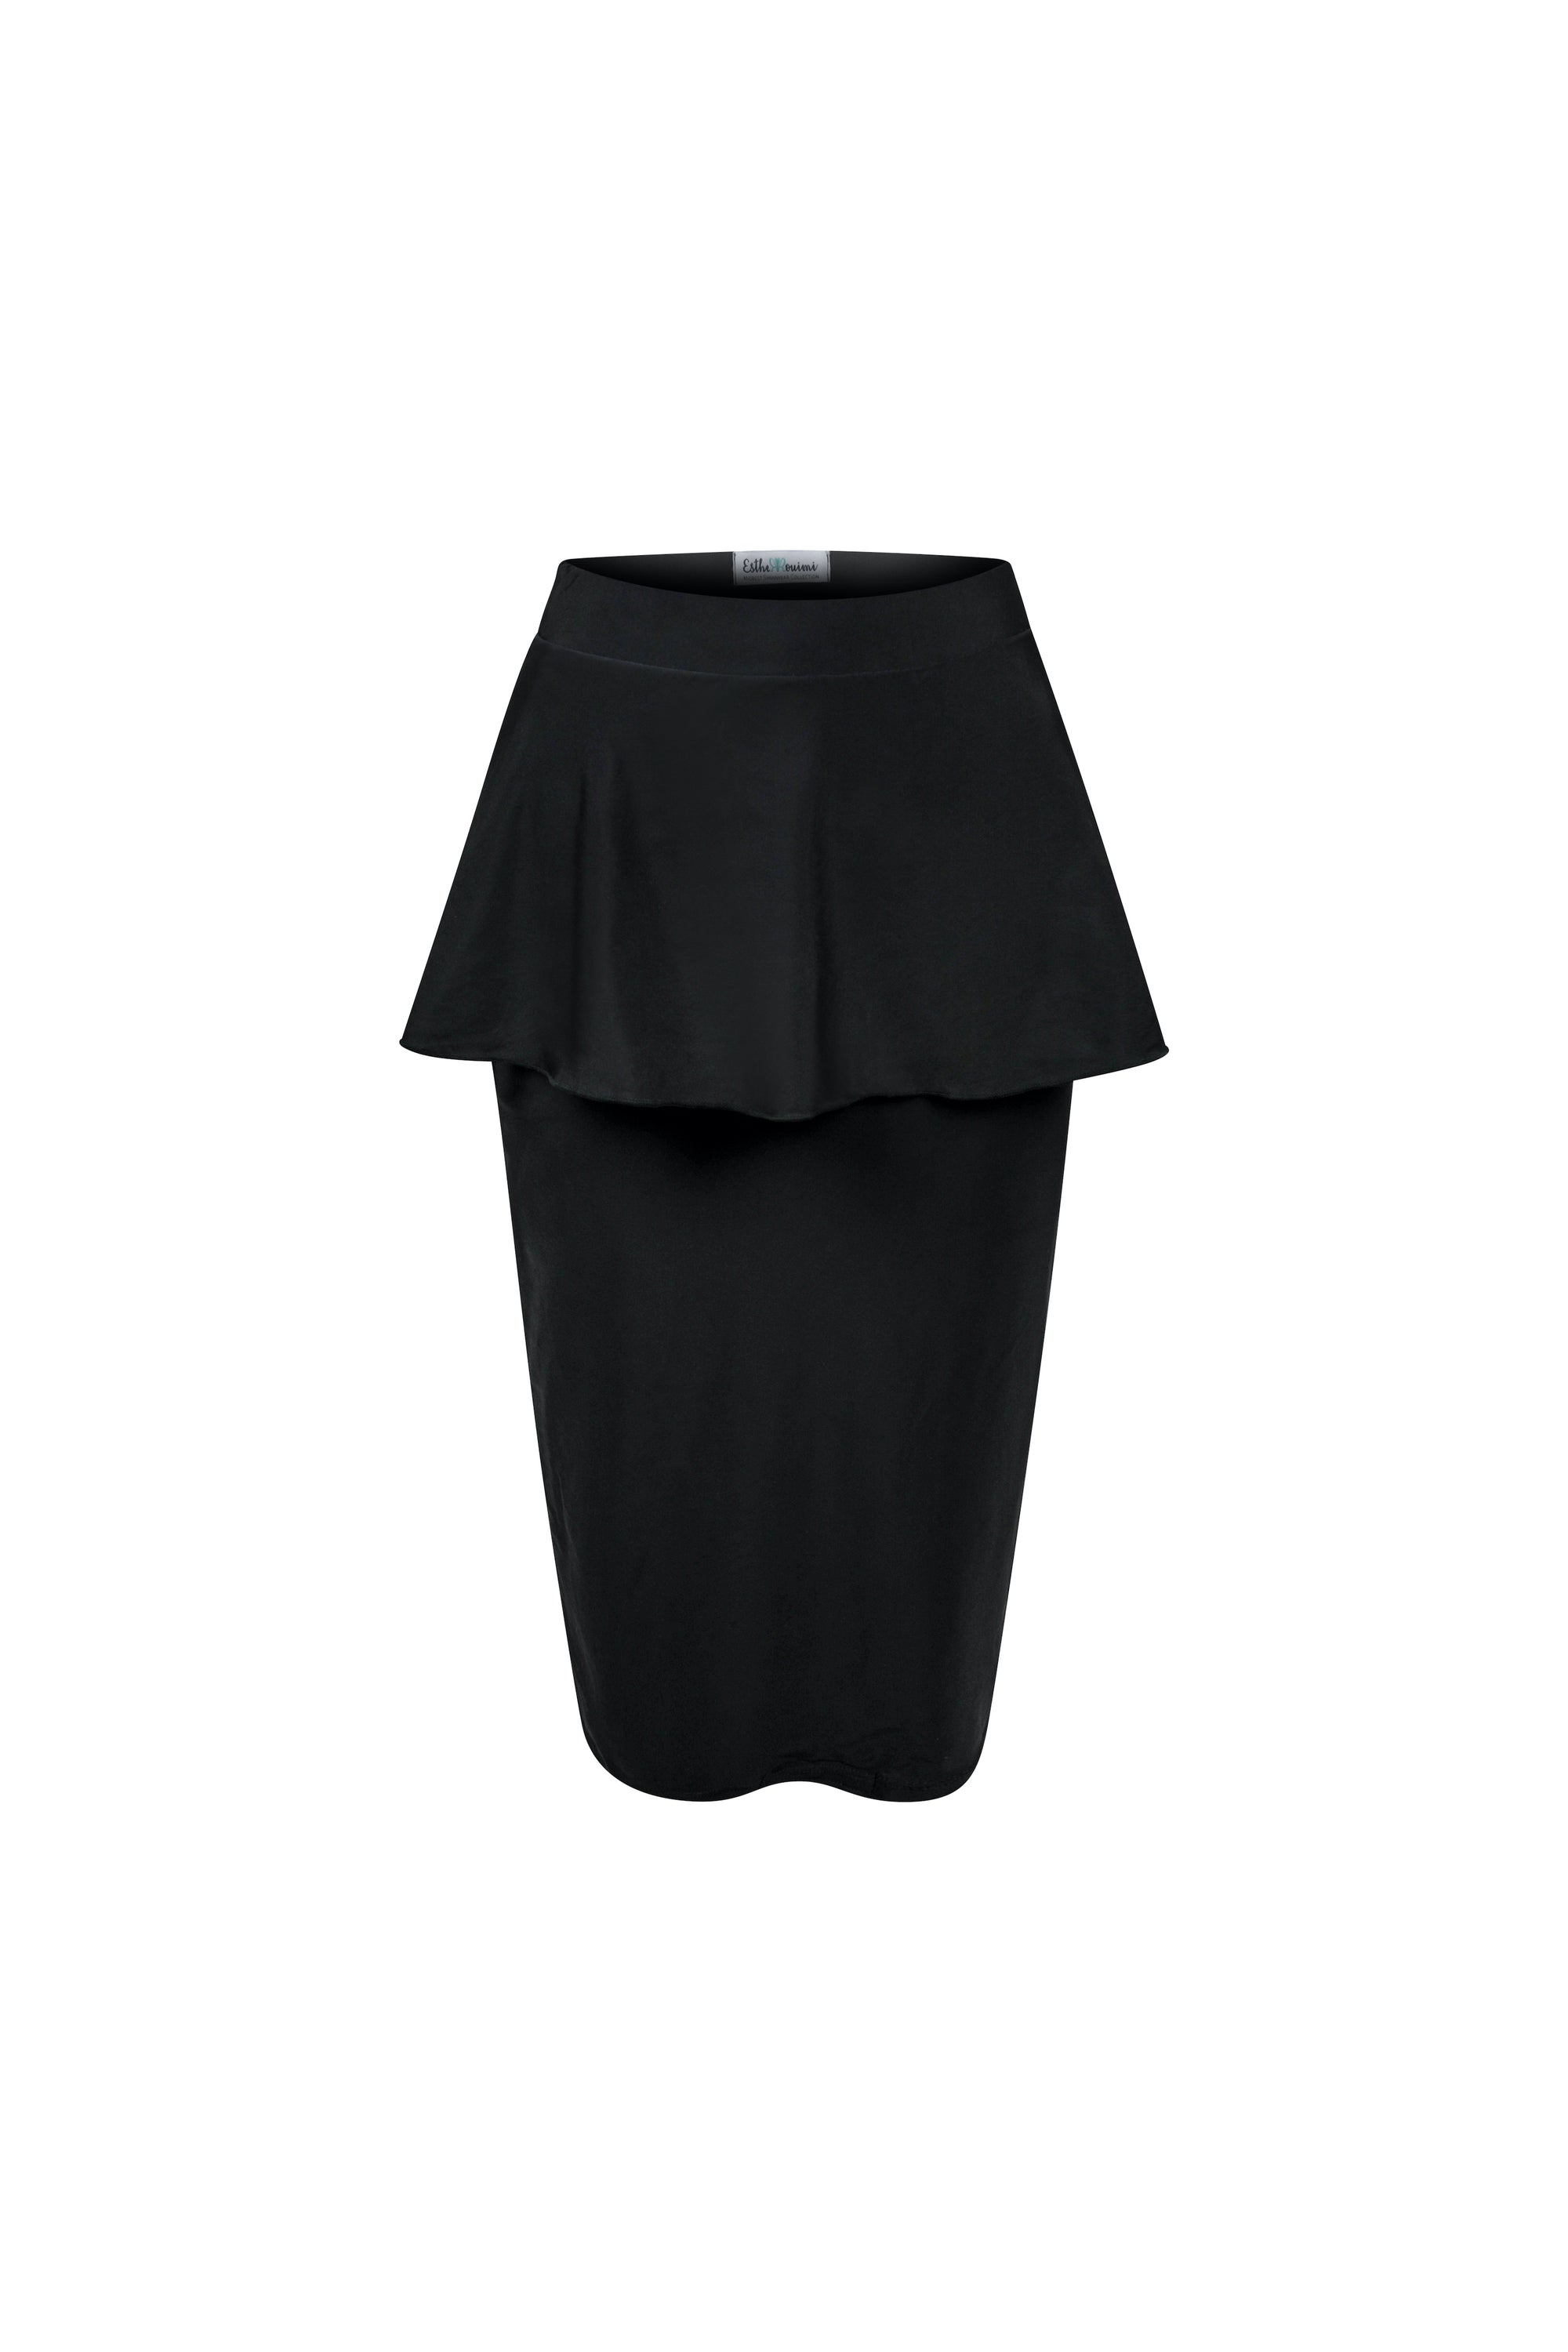 Orlando Peplum Skirt